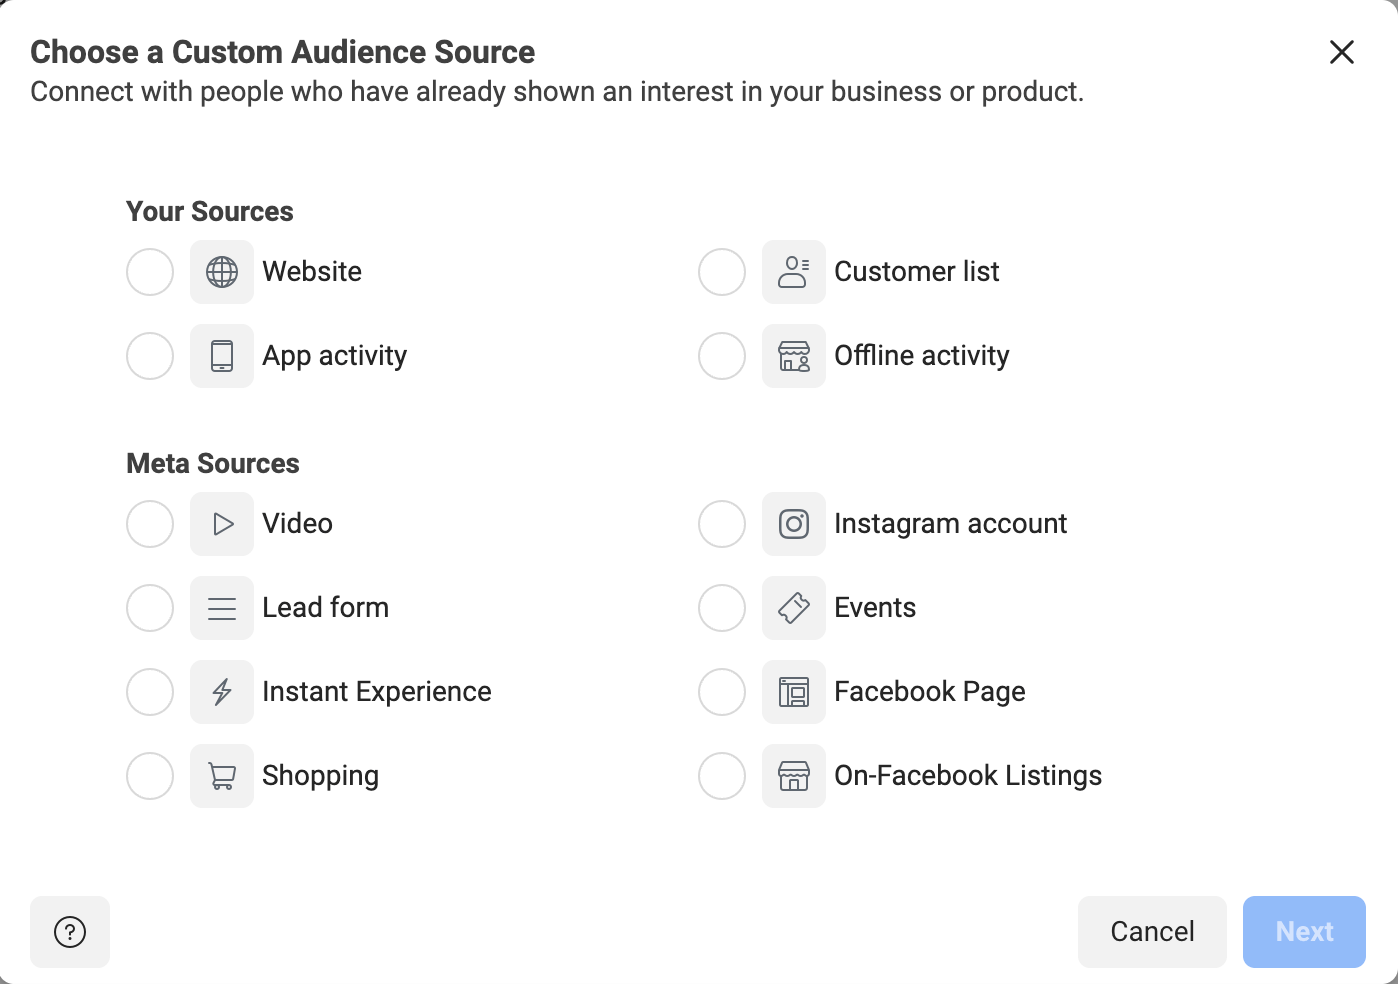 Facebook's custom audience sources